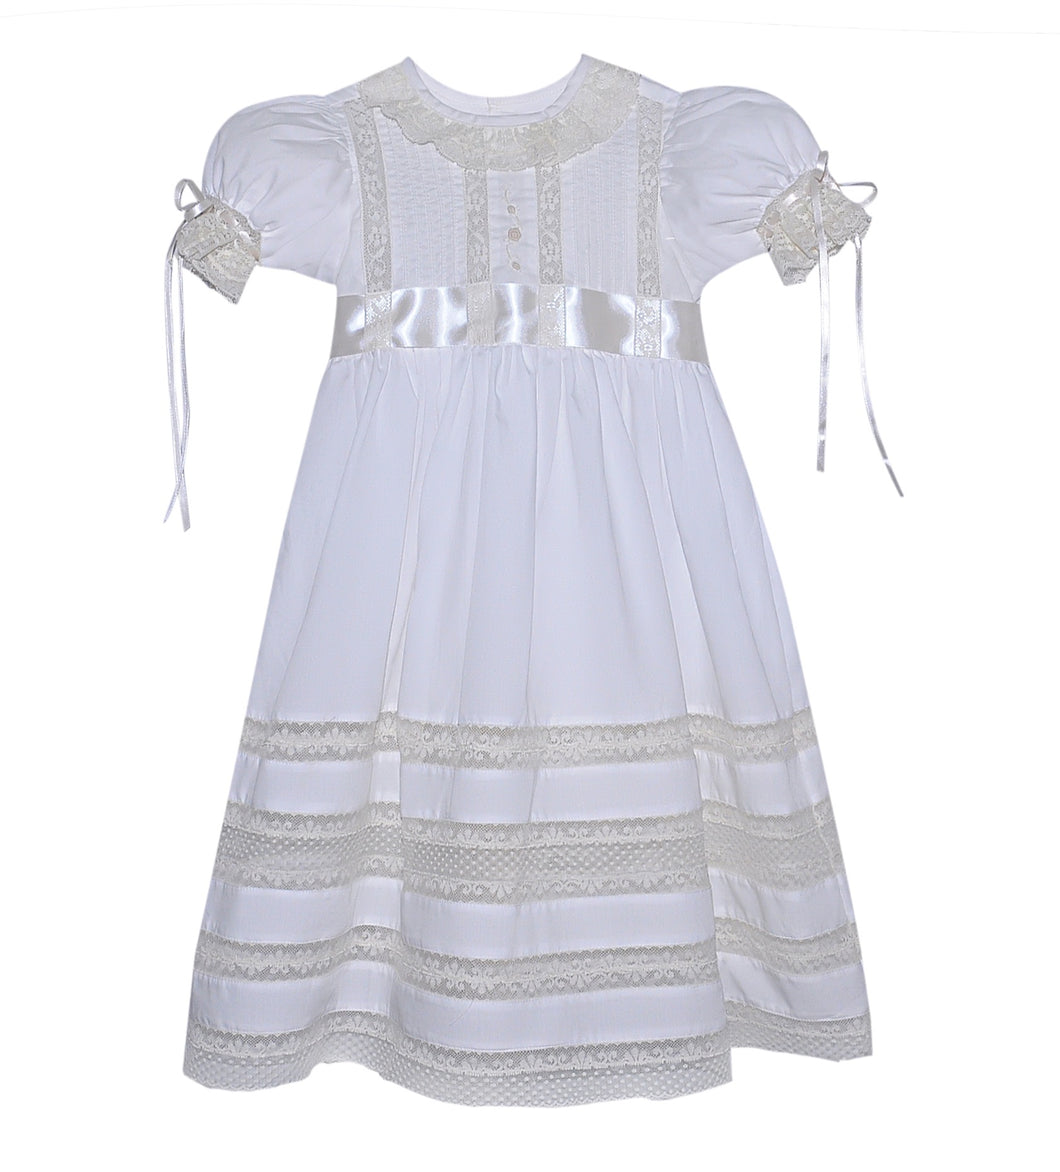 P & R Lily Rose Dress- White